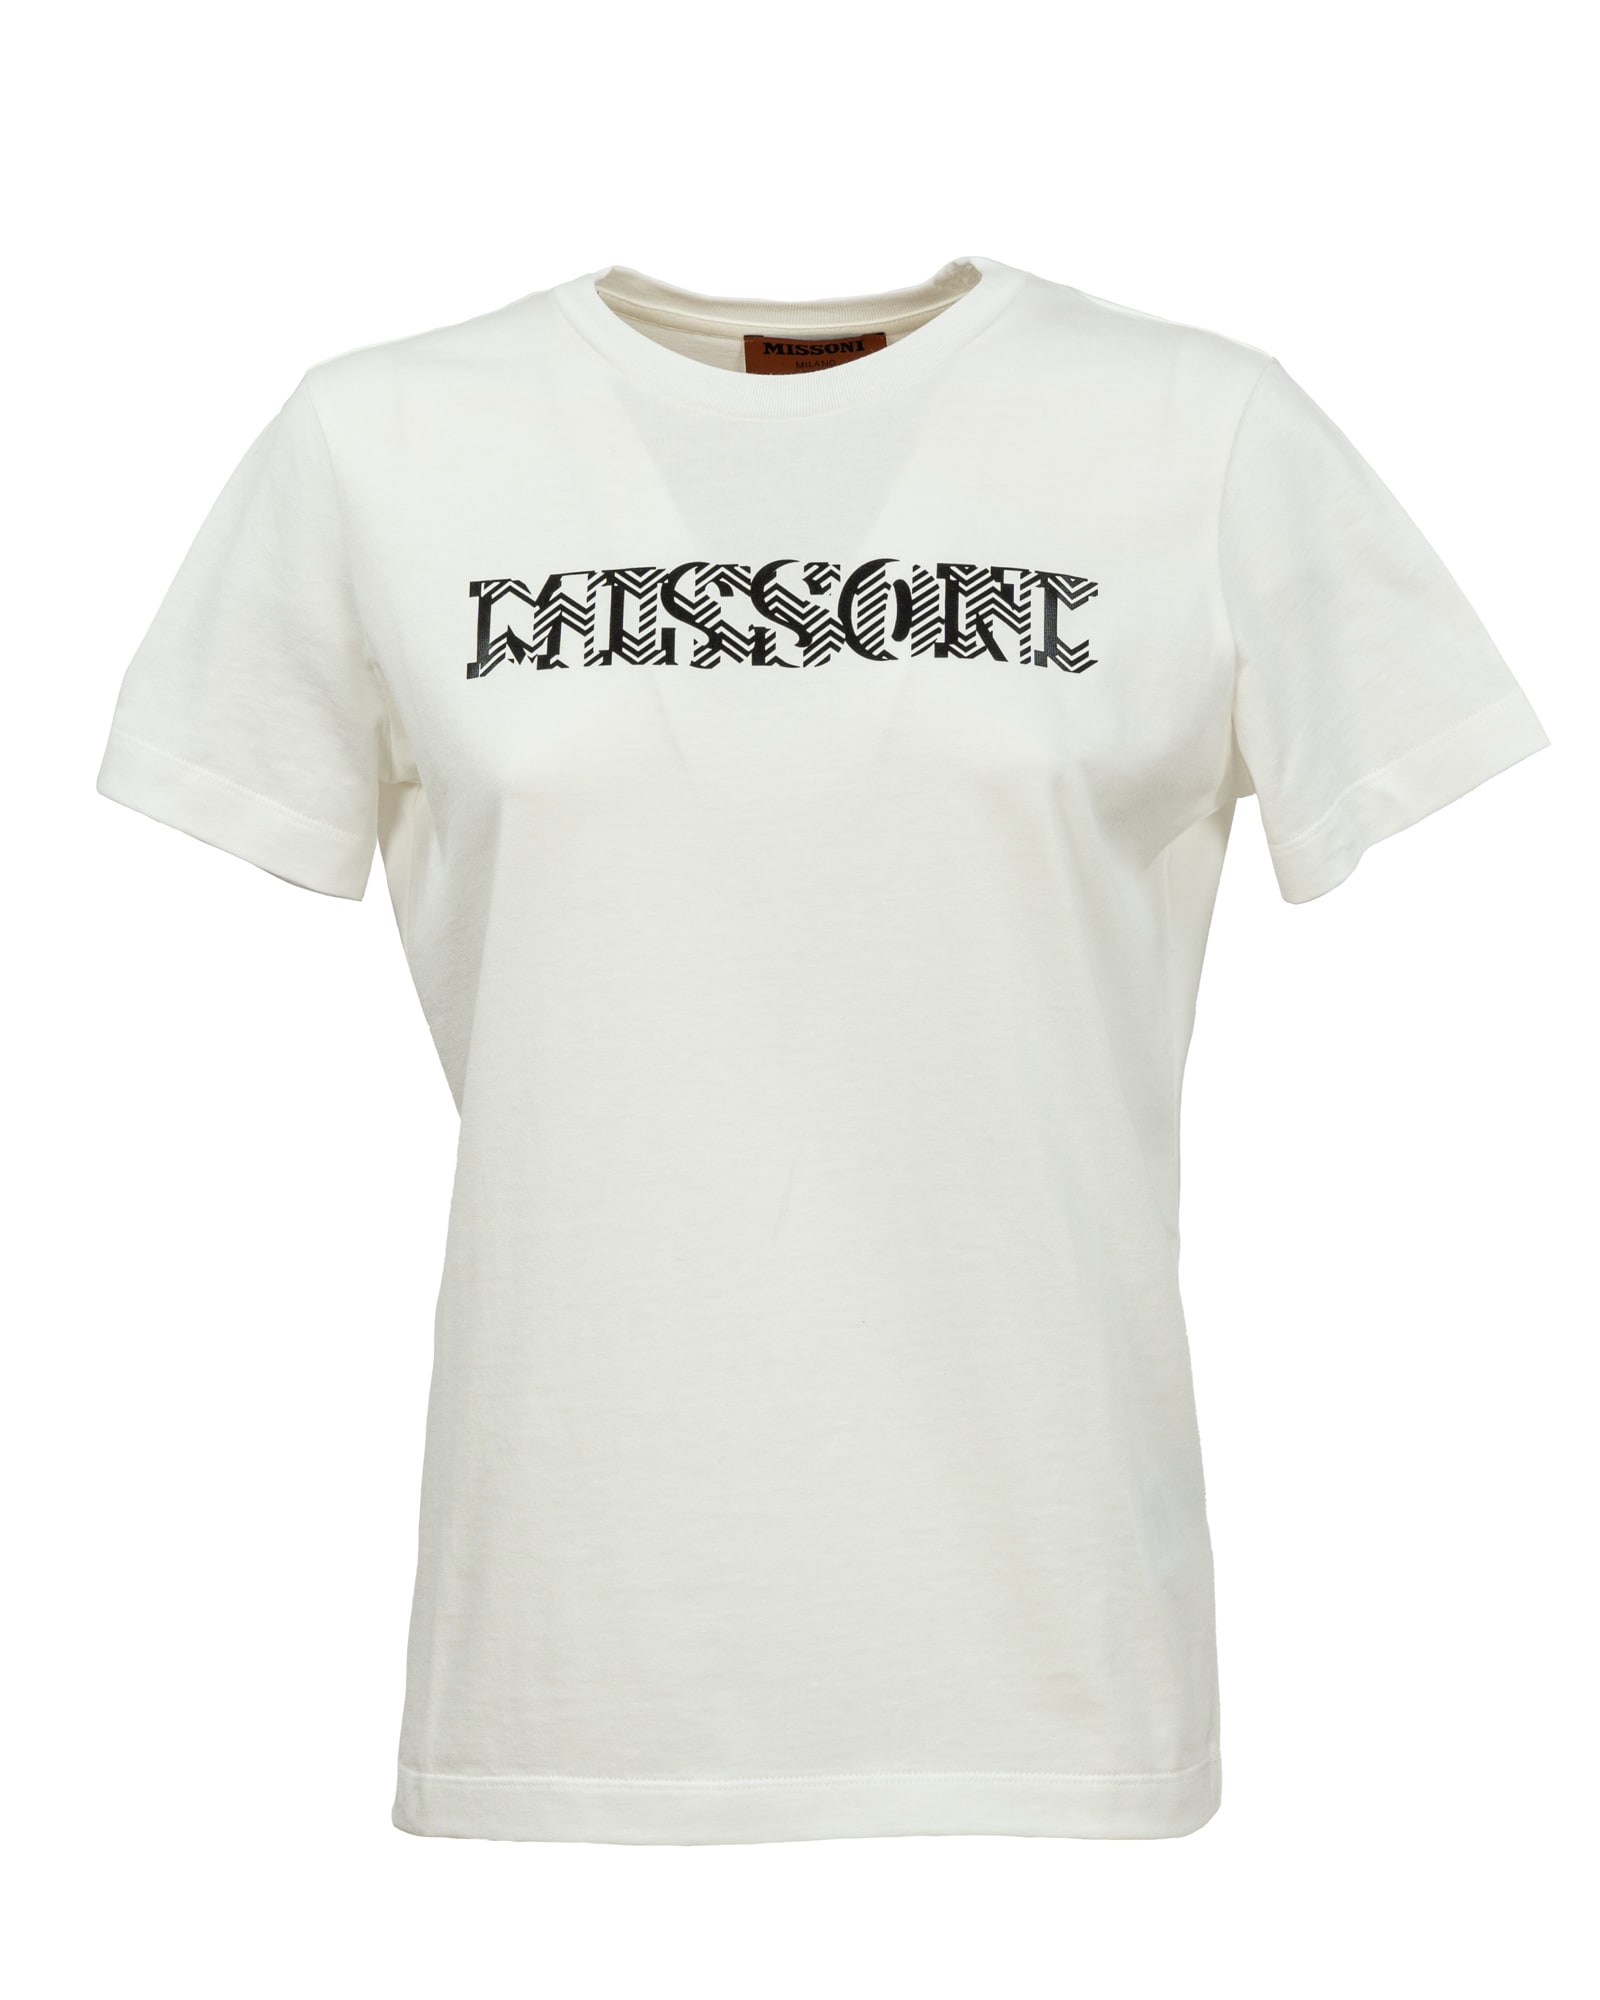 Missoni crewneck t-shirt